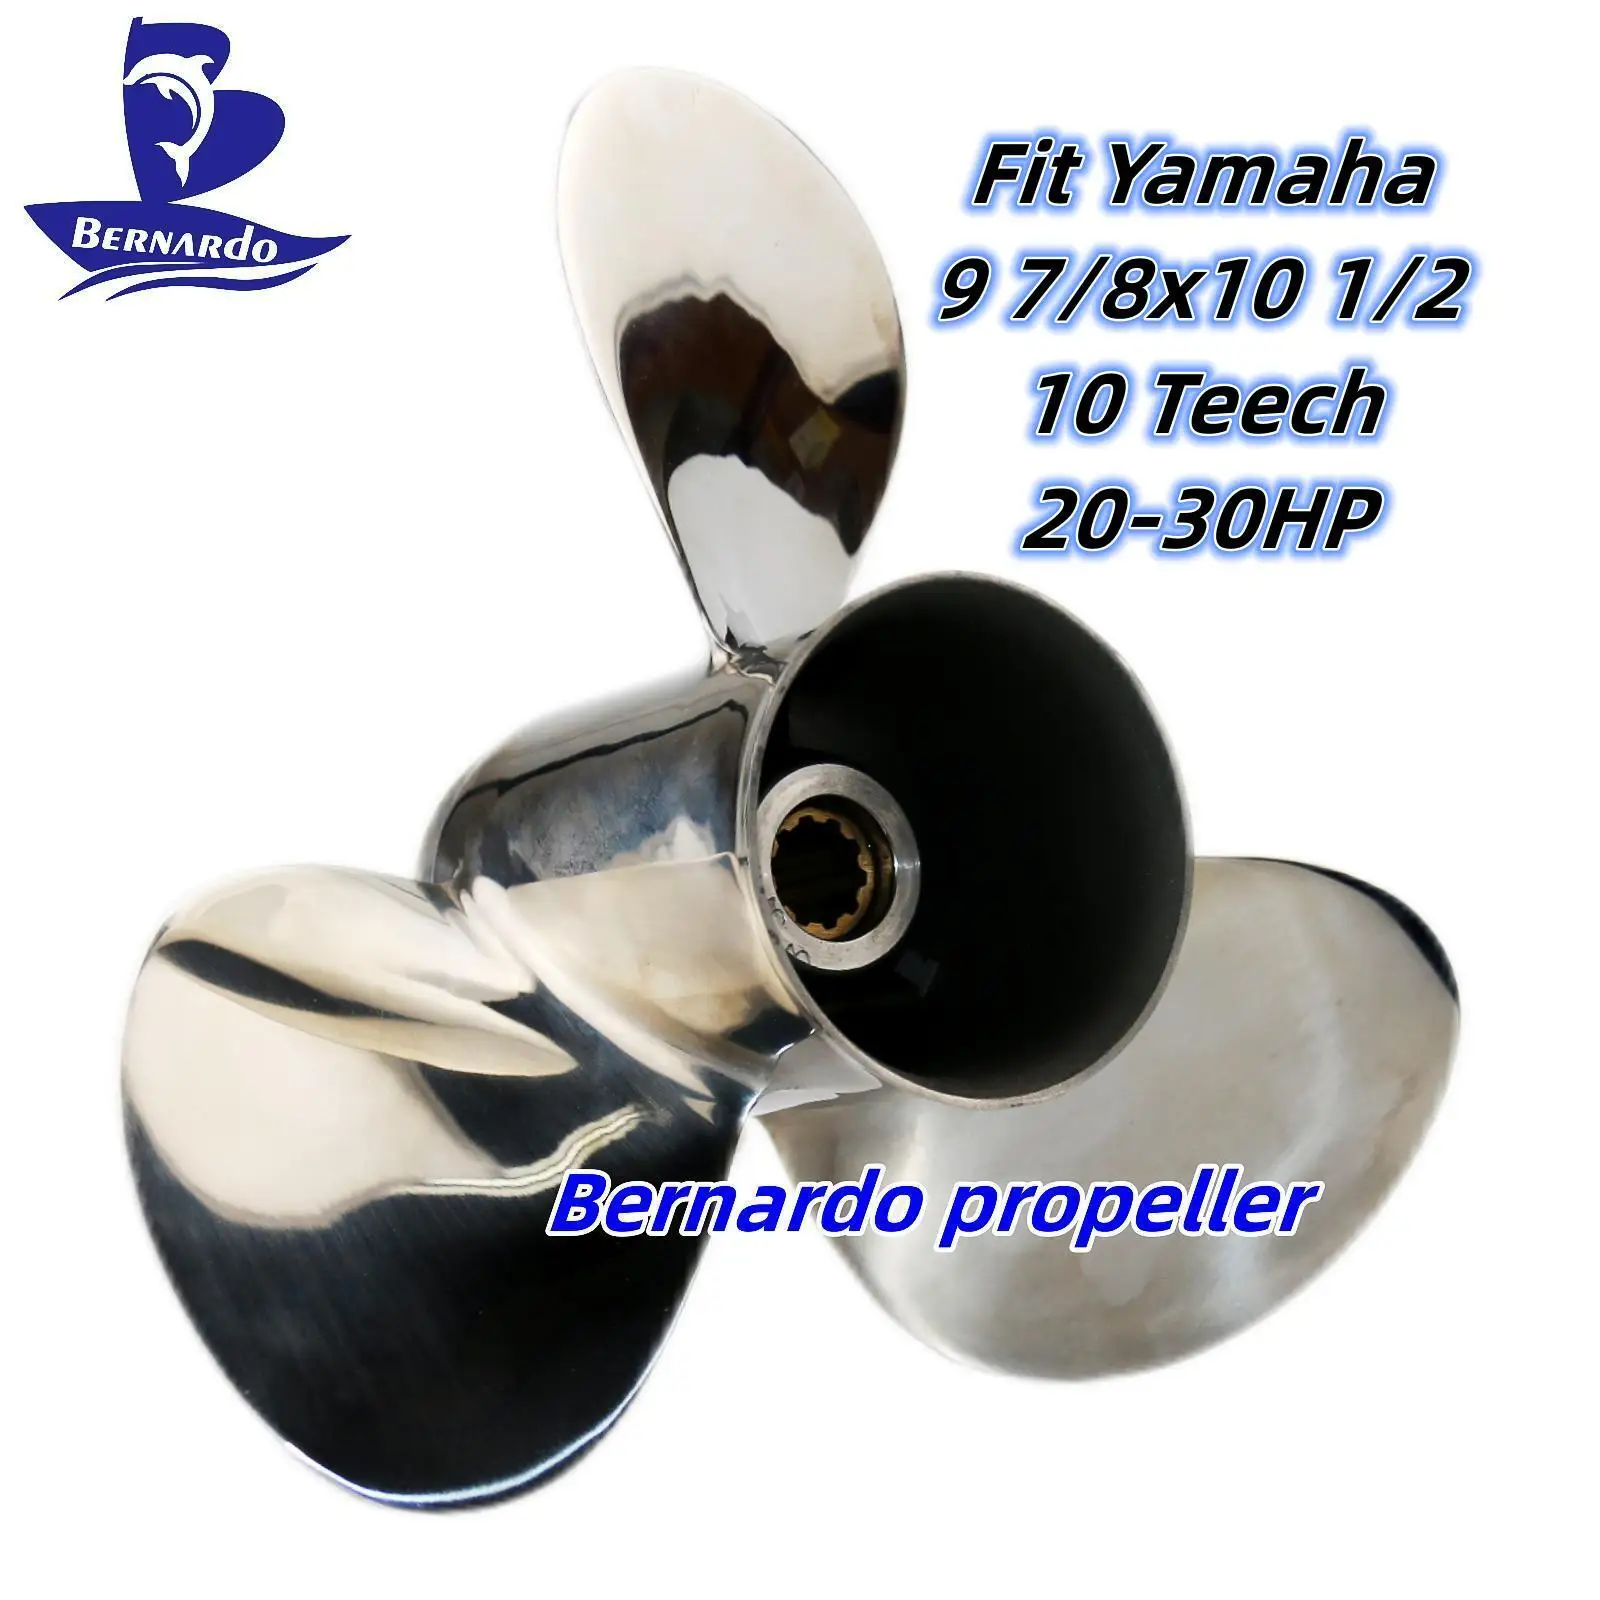 Bernardo Boat Propeller 9 7/8x10 1/2 Fit Yamaha Outboard Engine 20 25 30 HP Motor Stainless Steel Screw 3 Blade 10 Tooth Spline